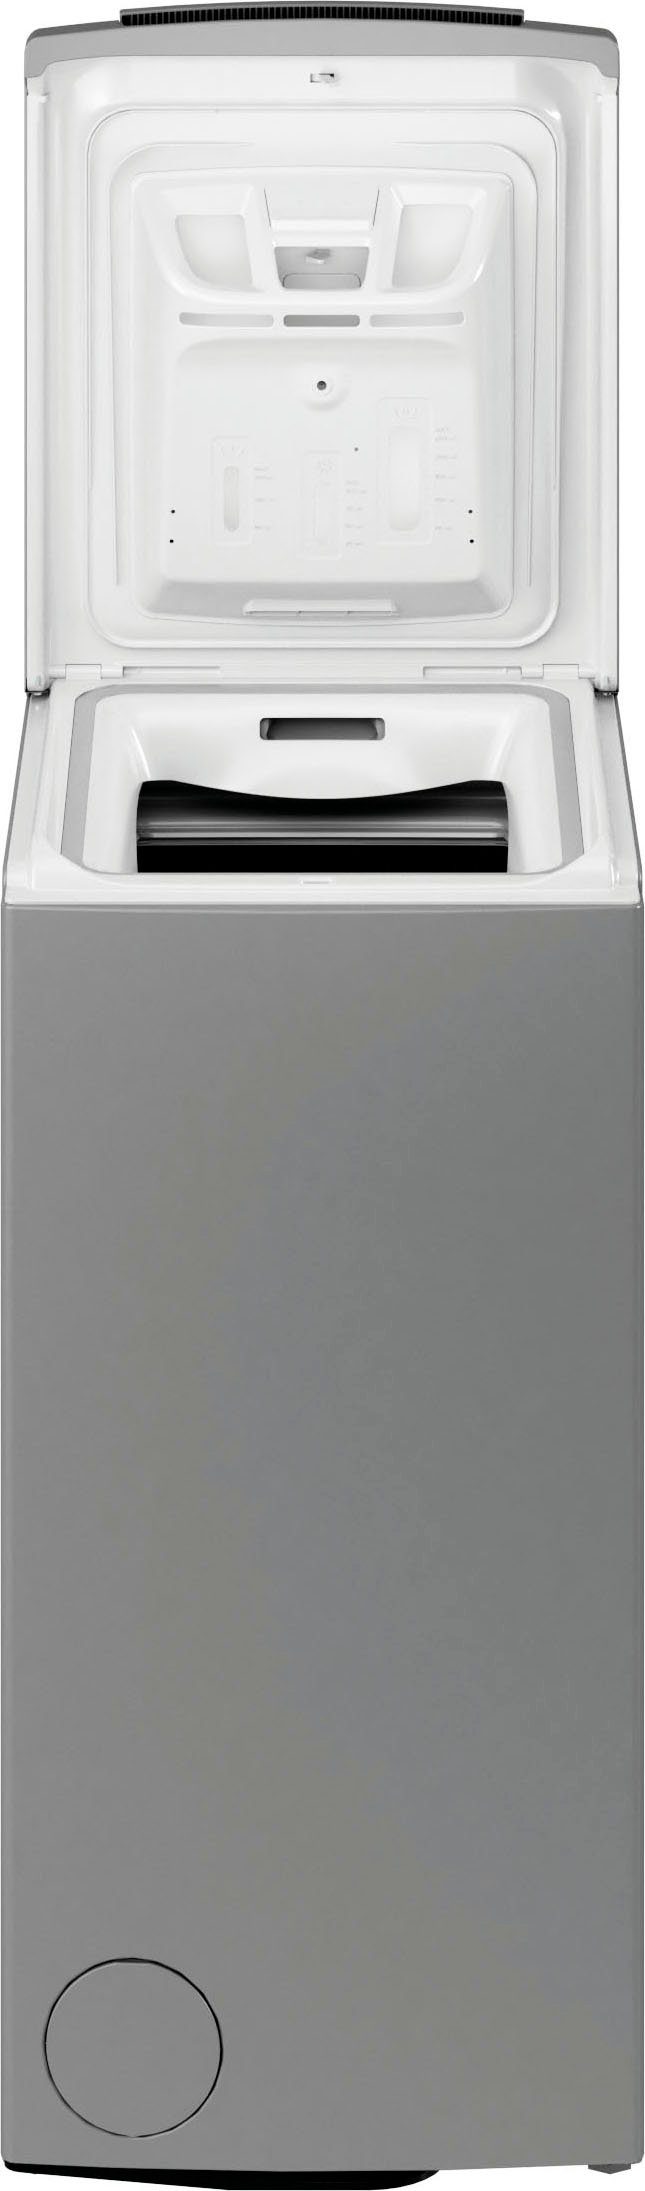 WMT Waschmaschine 6513 6,5 kg, D4, 1300 BAUKNECHT U/min Toplader